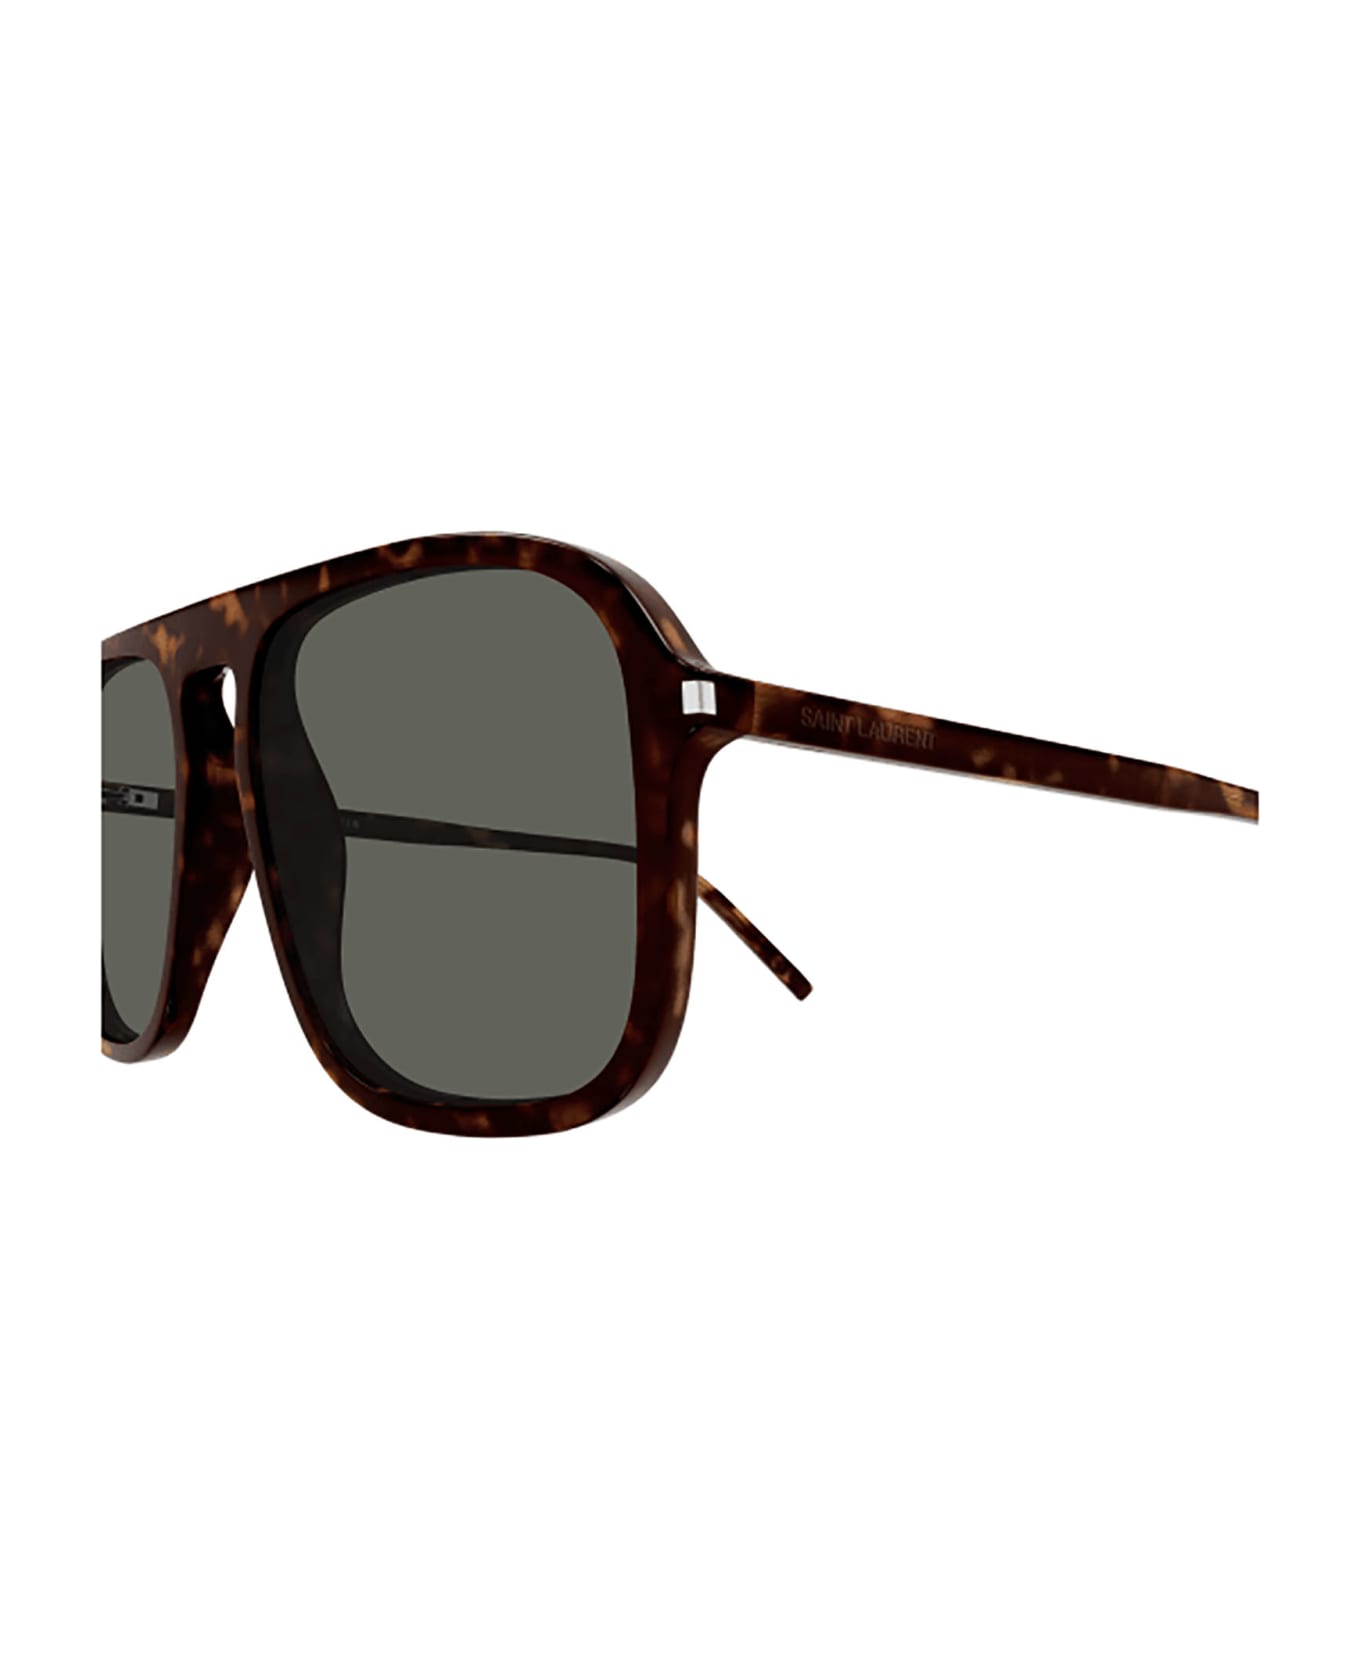 Saint Laurent Eyewear SL 590 Sunglasses - Havana Havana Grey